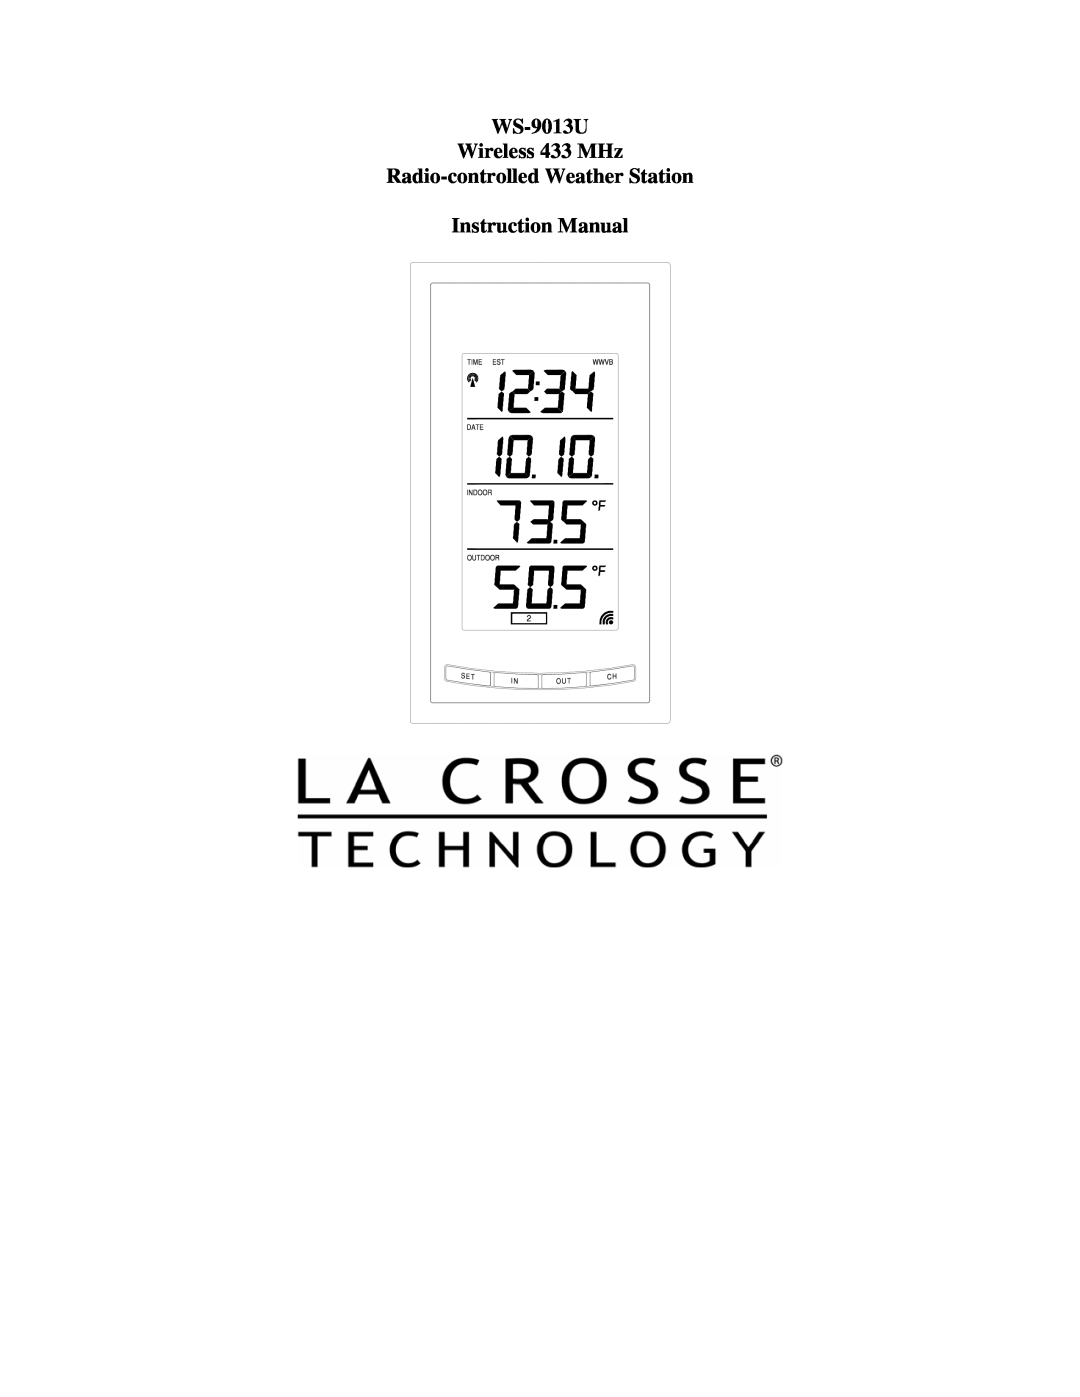 La Crosse Technology instruction manual WS-9013U Wireless 433 MHz Radio-controlled Weather Station, Instruction Manual 